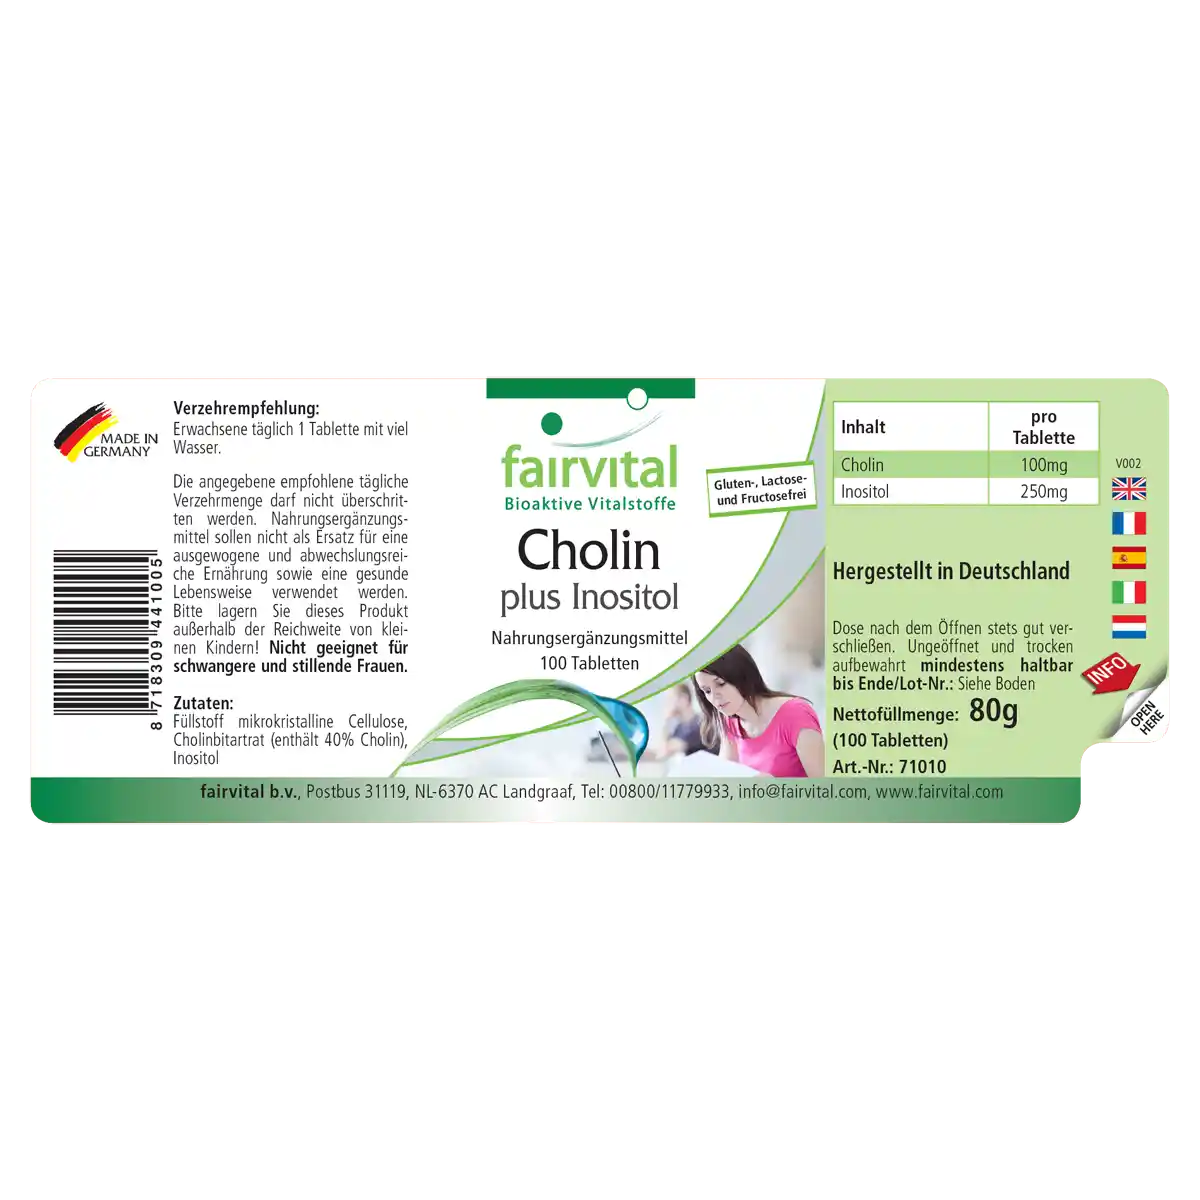 Choline plus inositol - 100 tablets